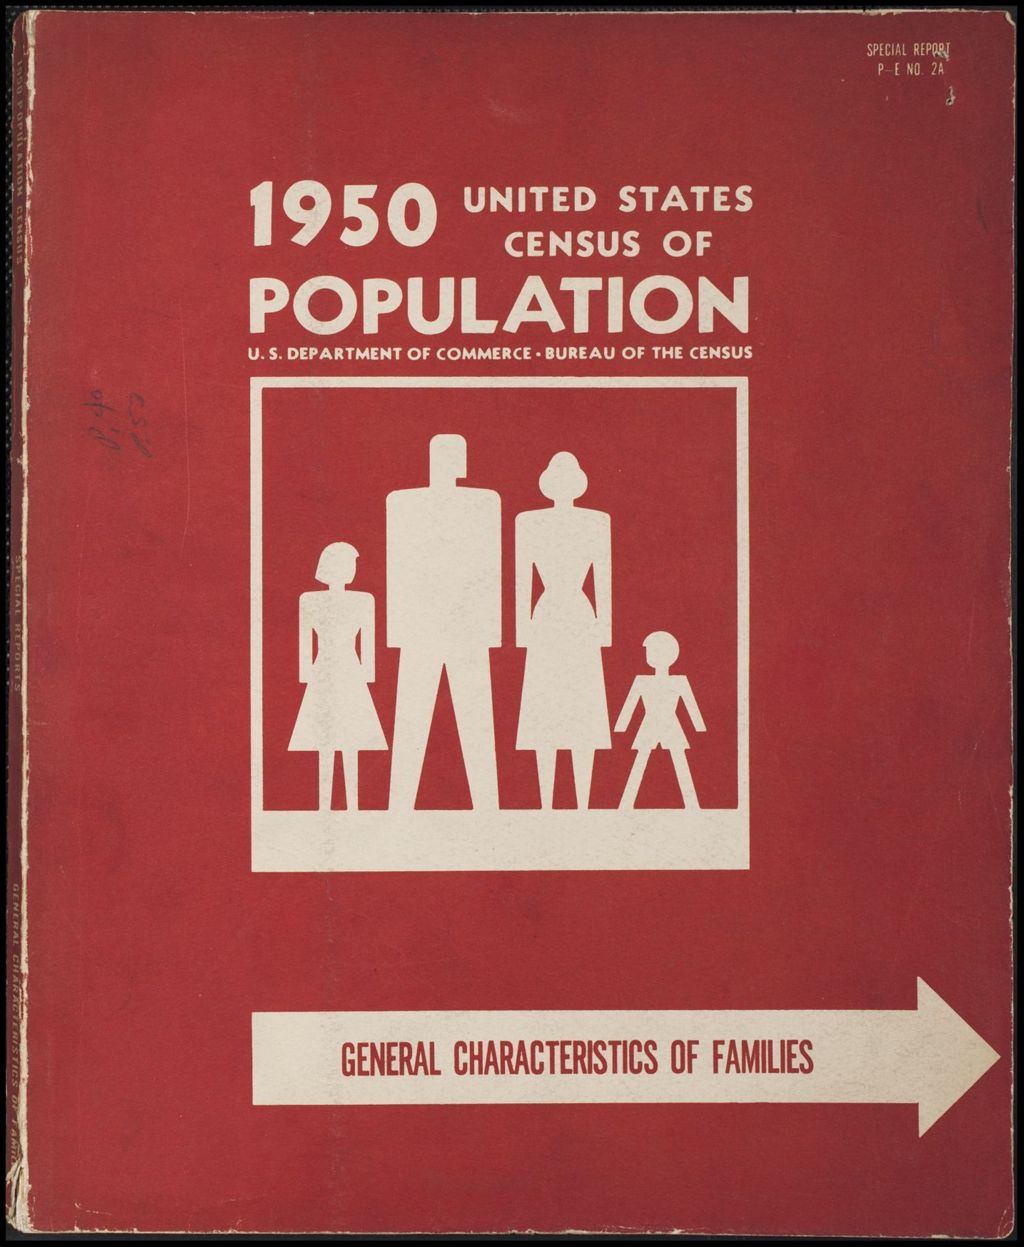 Miniature of Housing Statistics Tables, 1950 (Folder III-271)